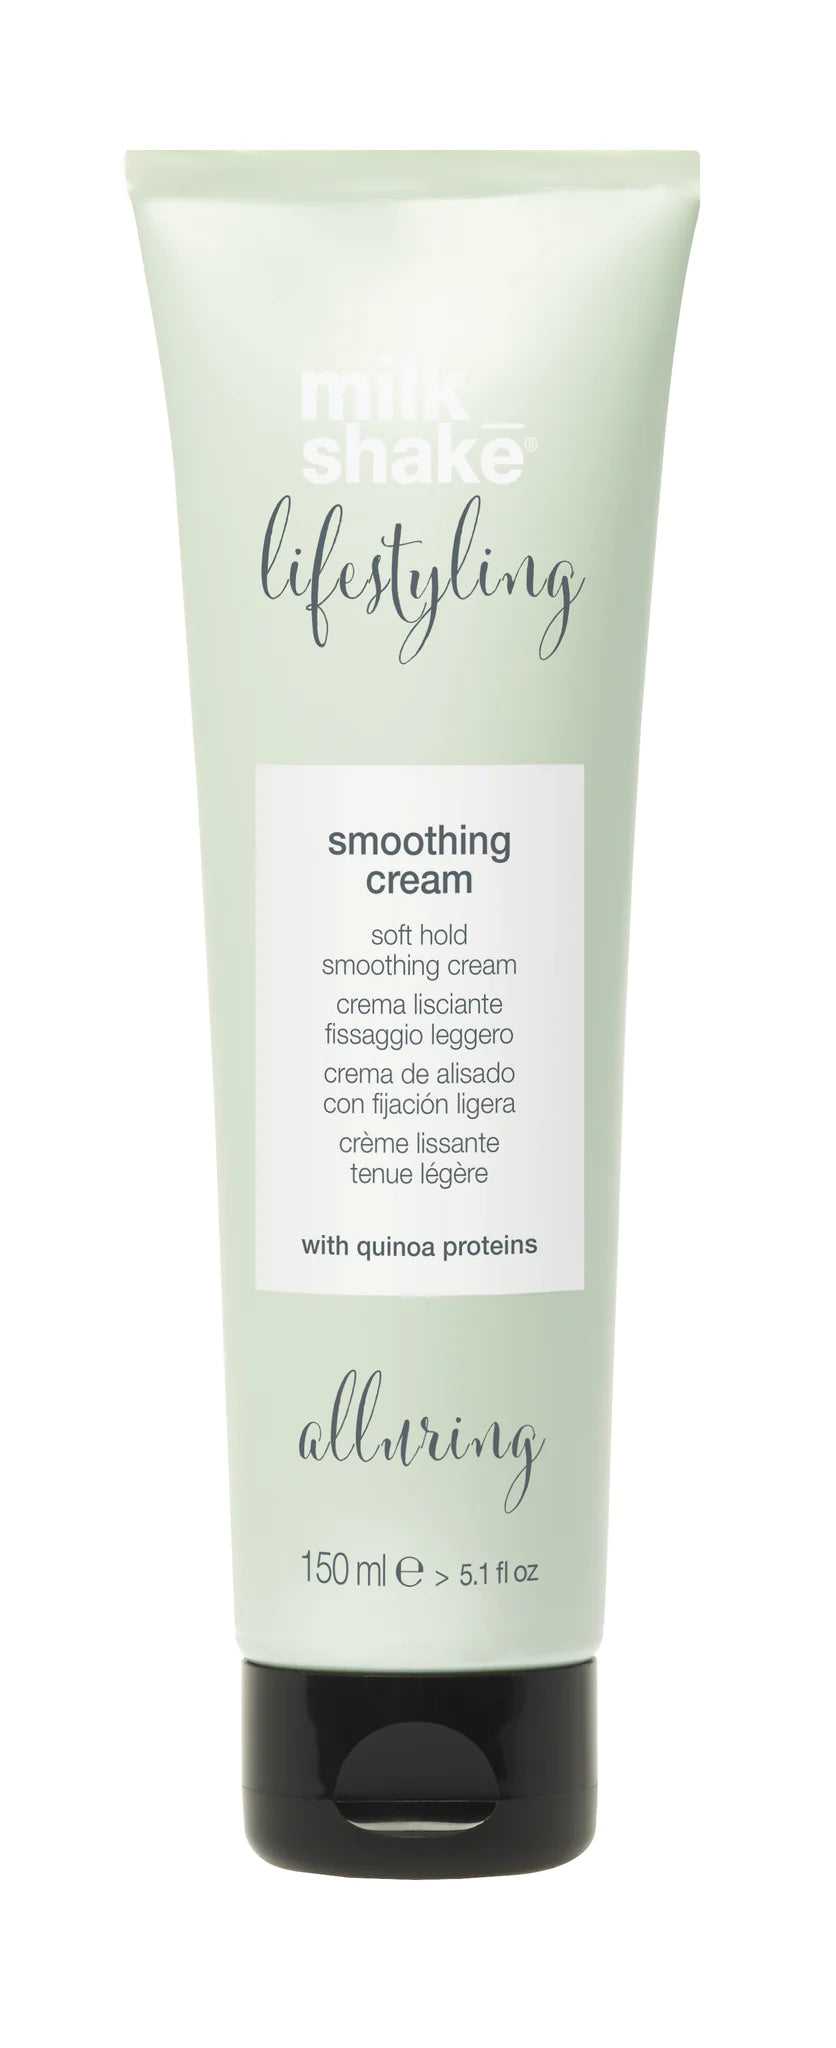 Milkshake Lifestyling smoothing cream